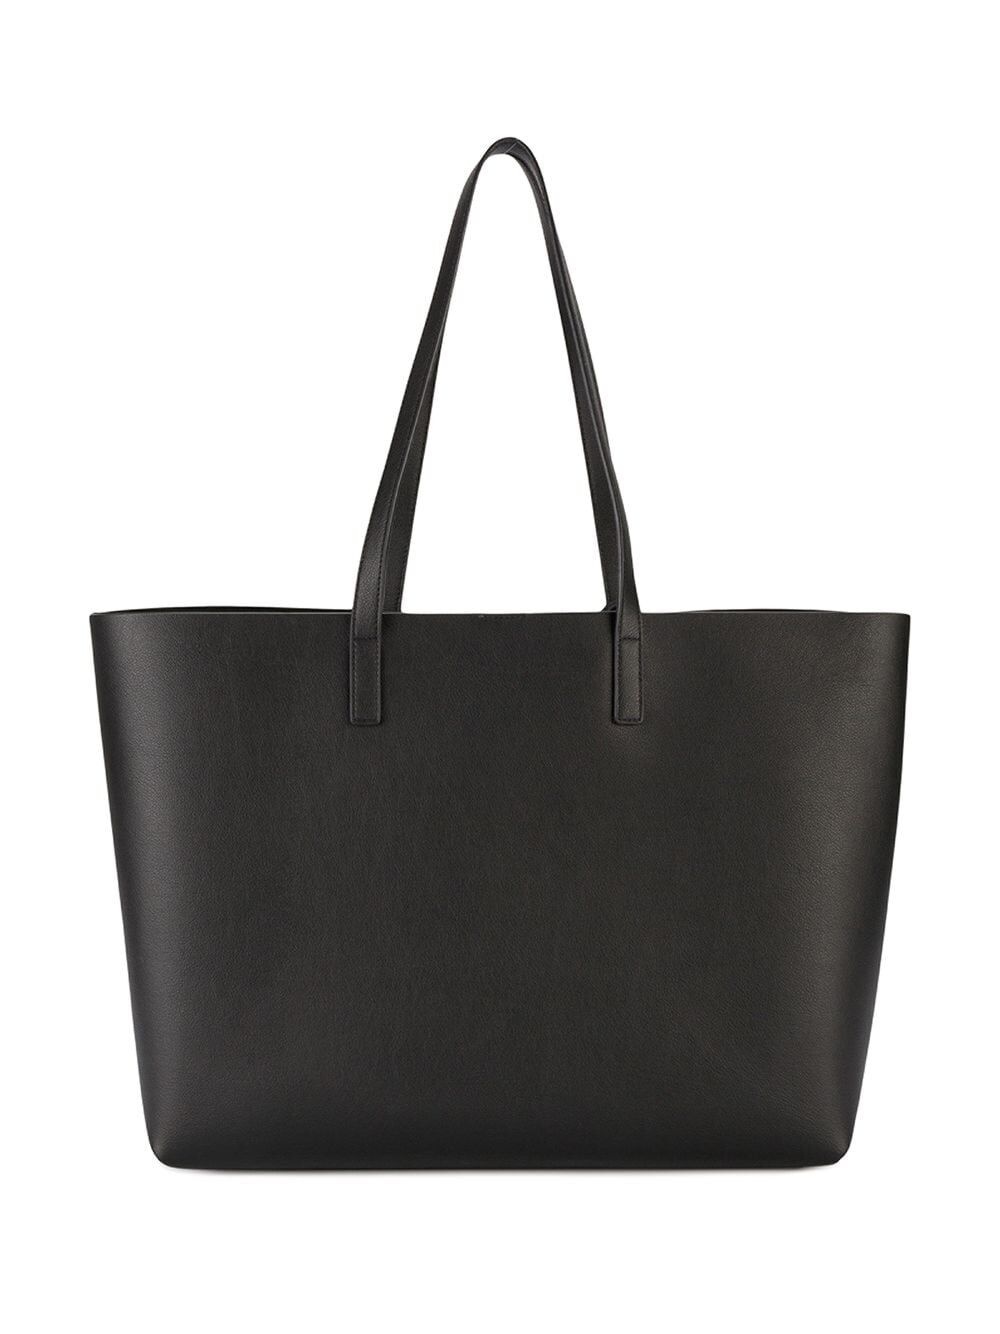 Saint laurent leather shopping bag - 4